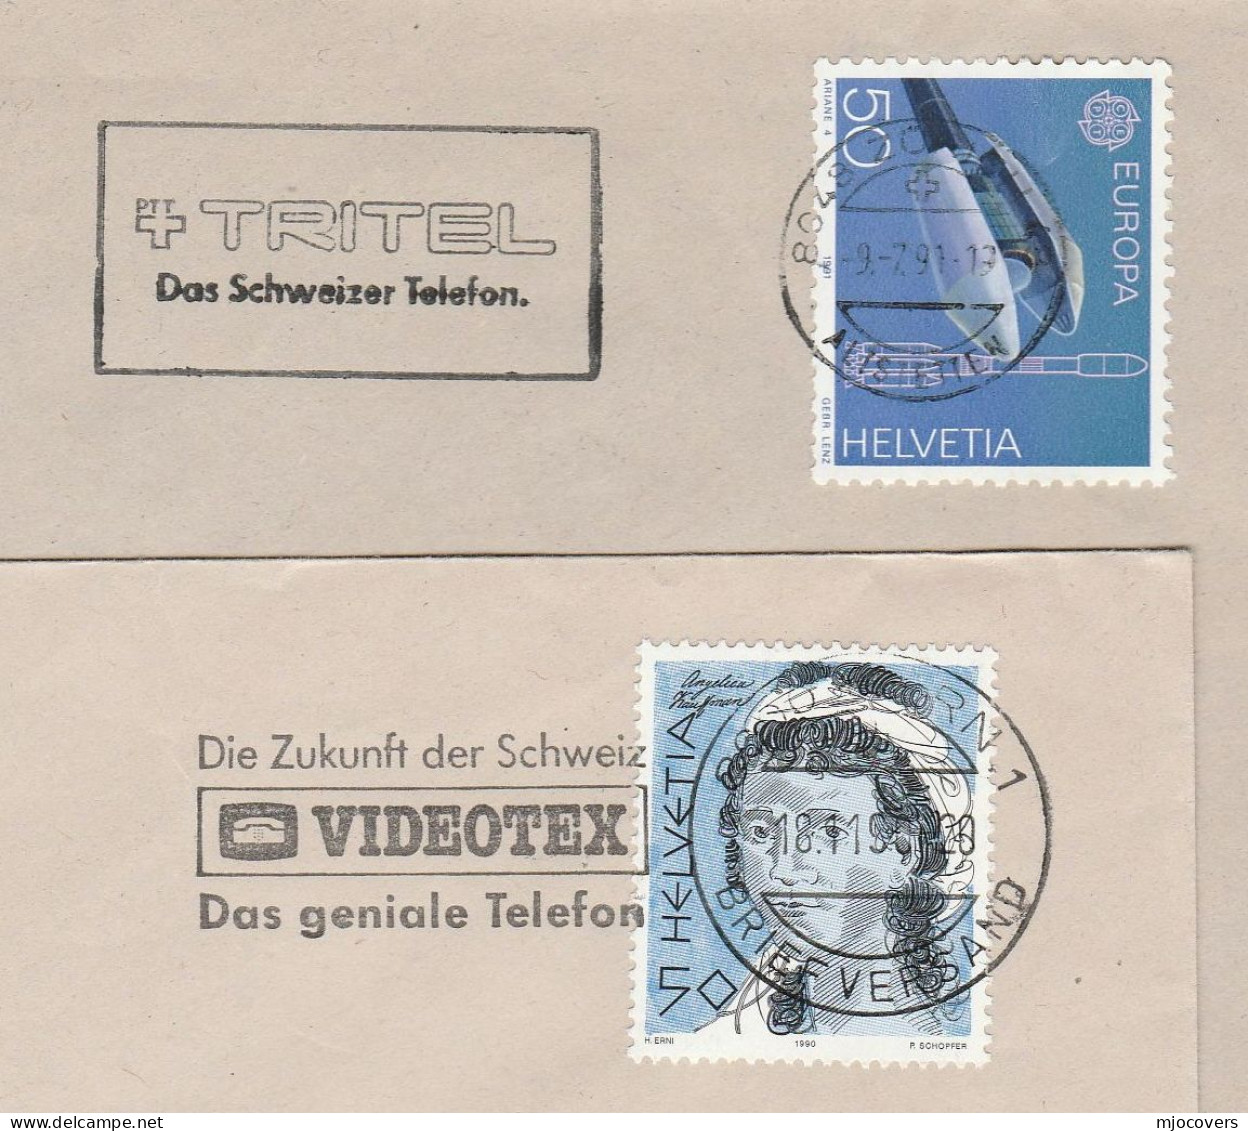 TELECOM Covers 1990 Illus VIDEOTEX PHONE & 1991 TRIDEL TELEPHONE Slogan Switzerland Stamps Cover - Telecom